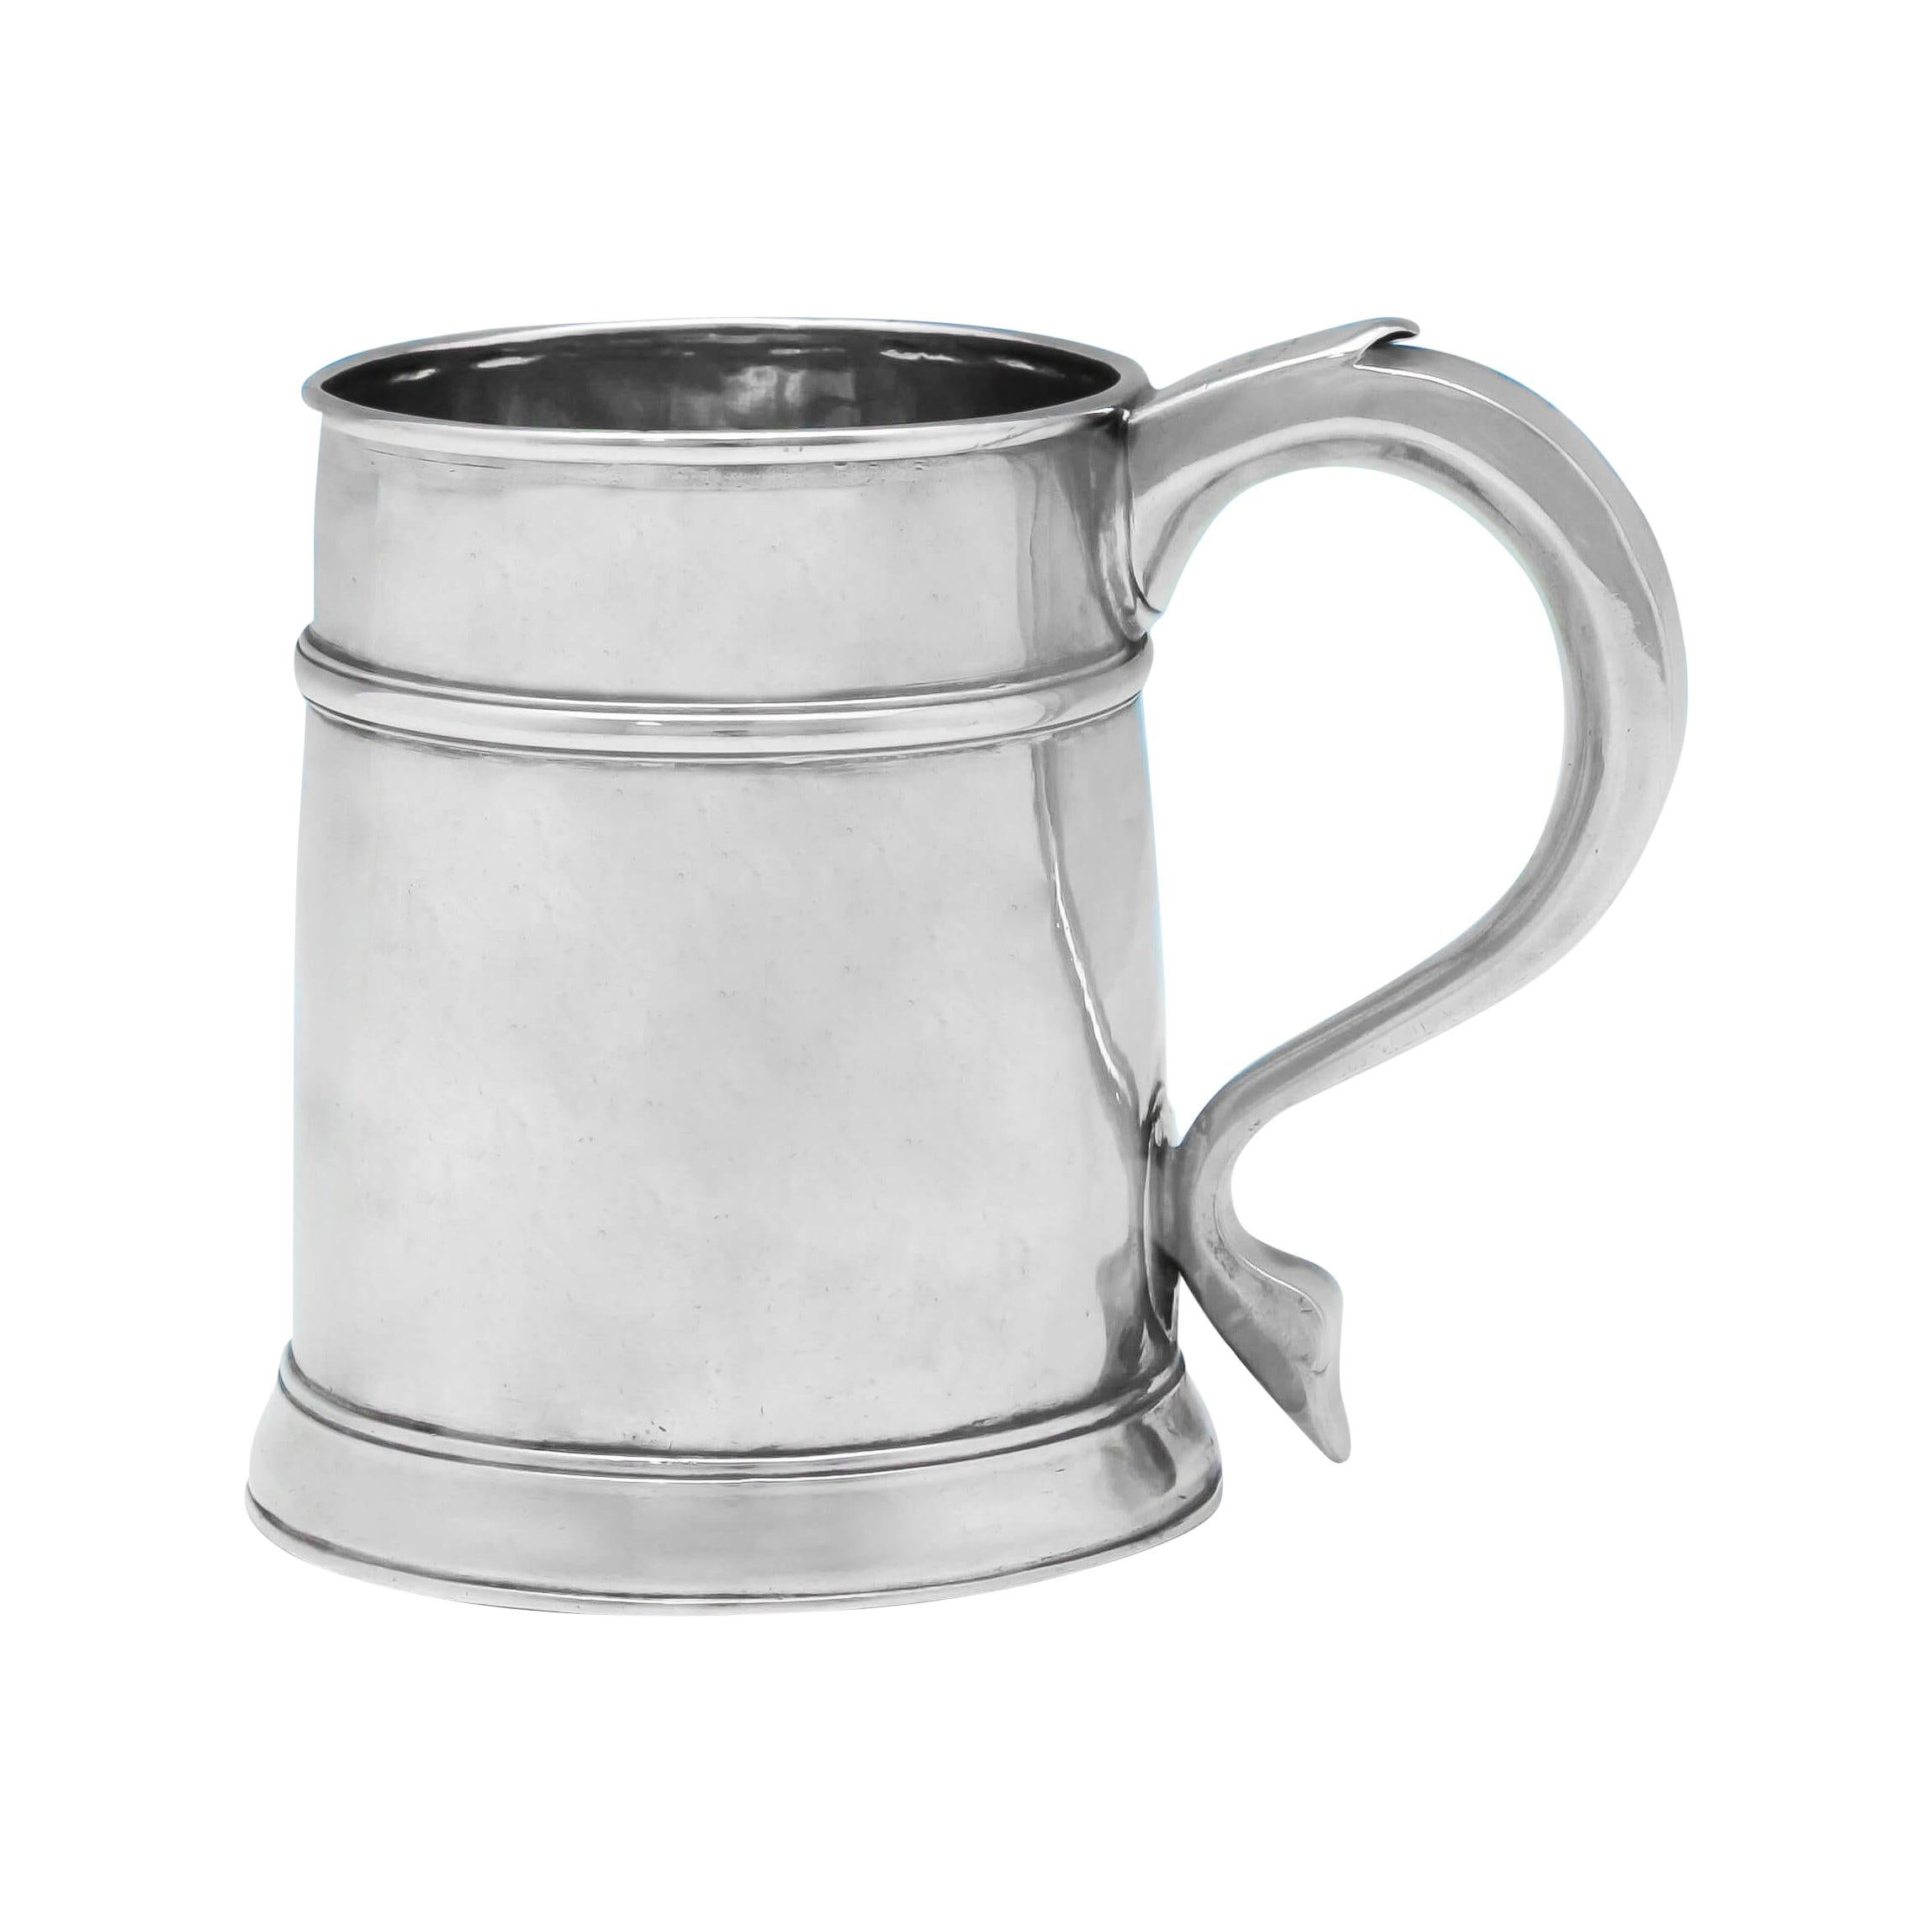 18th Century Queen Anne Period Antique Britannia Standard Silver Mug from 1705